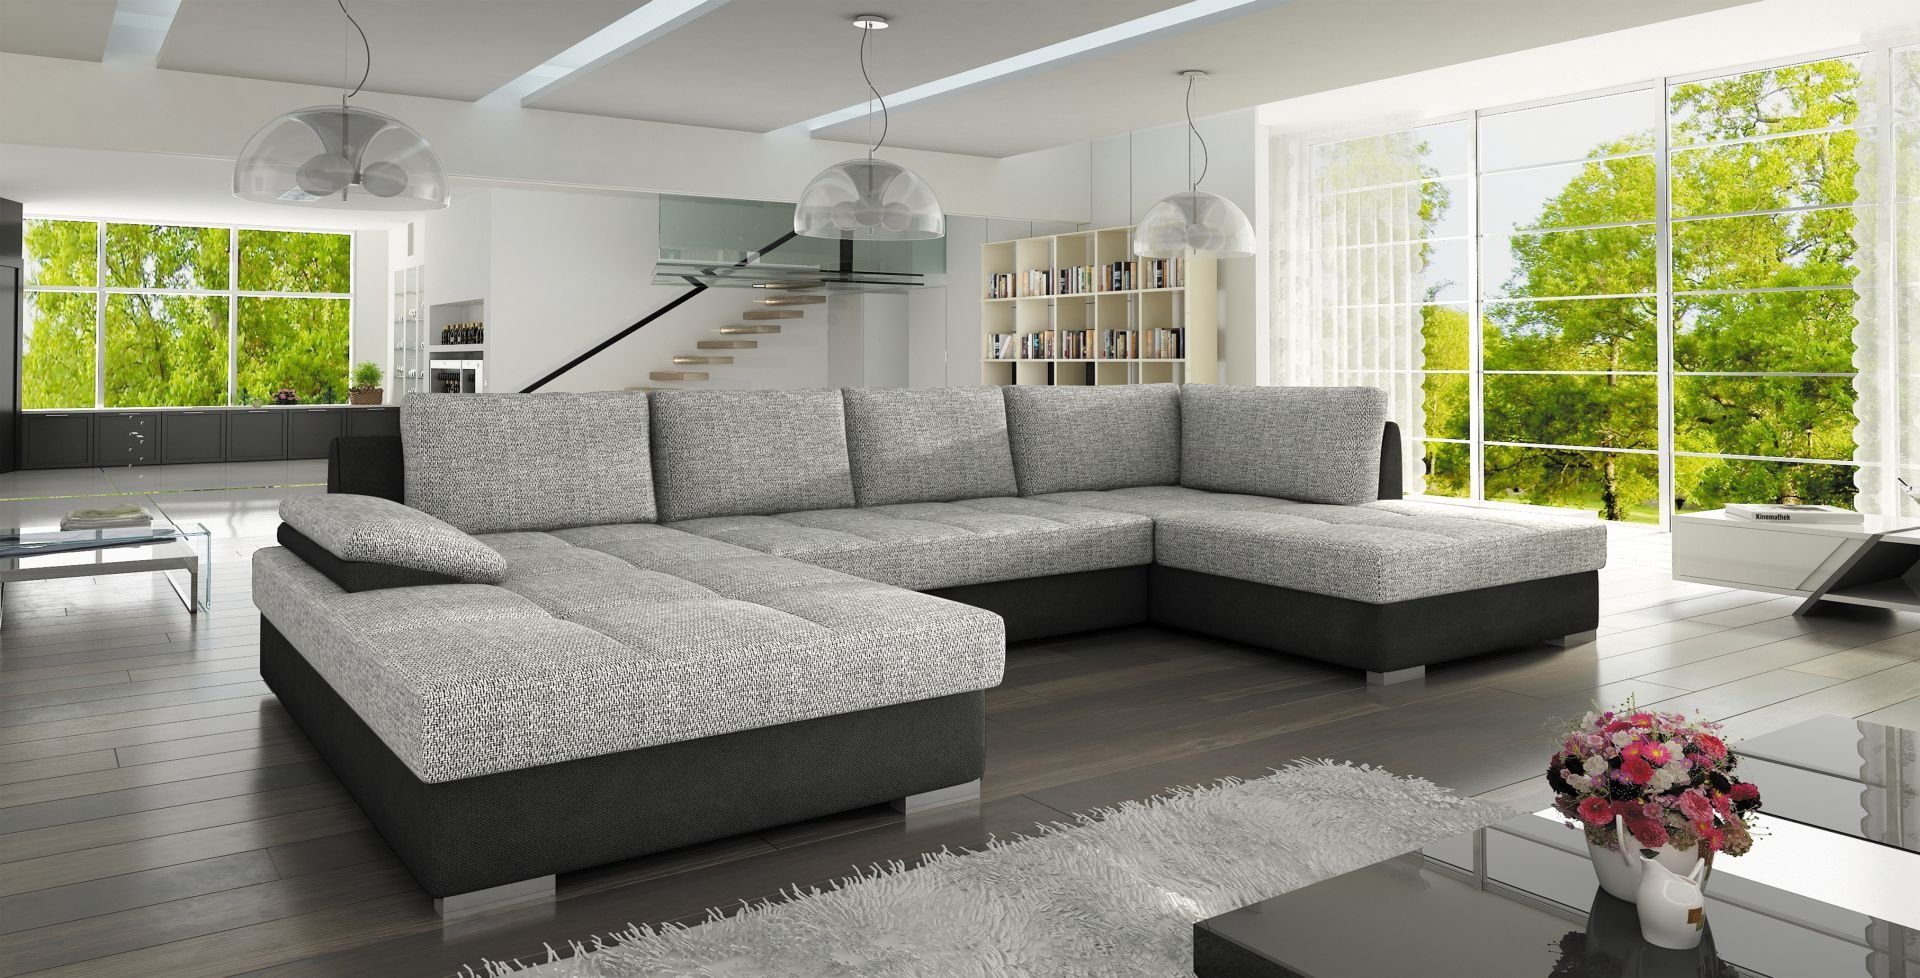 JVmoebel Ecksofa Luxus U-Form Wohnlandschaft Große Couch Polster Bettfunktion, Made in Europe Grau/Schwarz